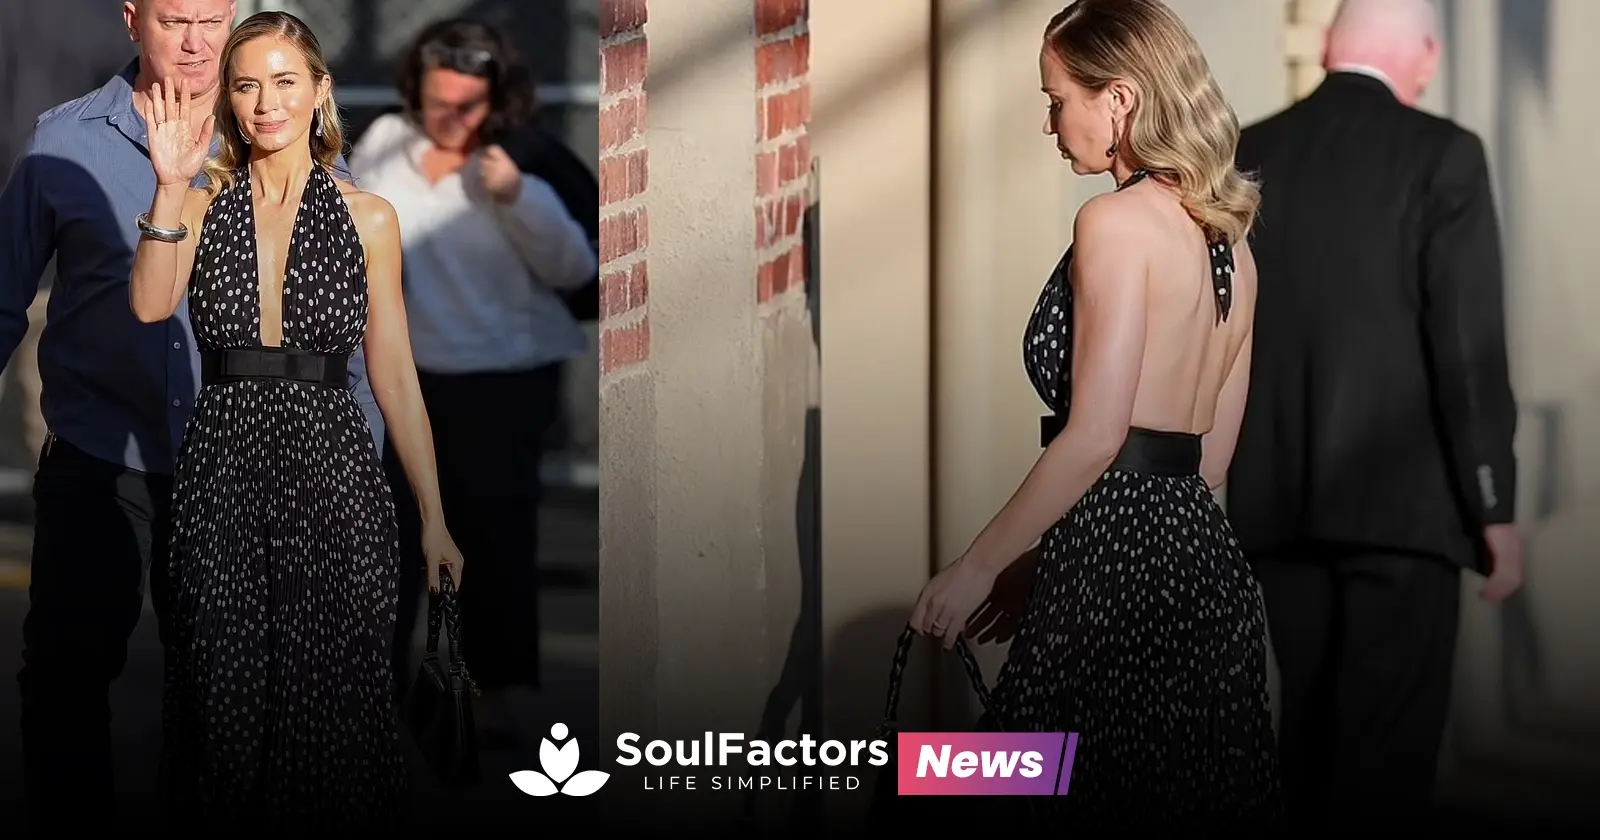 Emily Blunt Stuns in Polka Dot Dress for Jimmy Kimmel Live Appearance